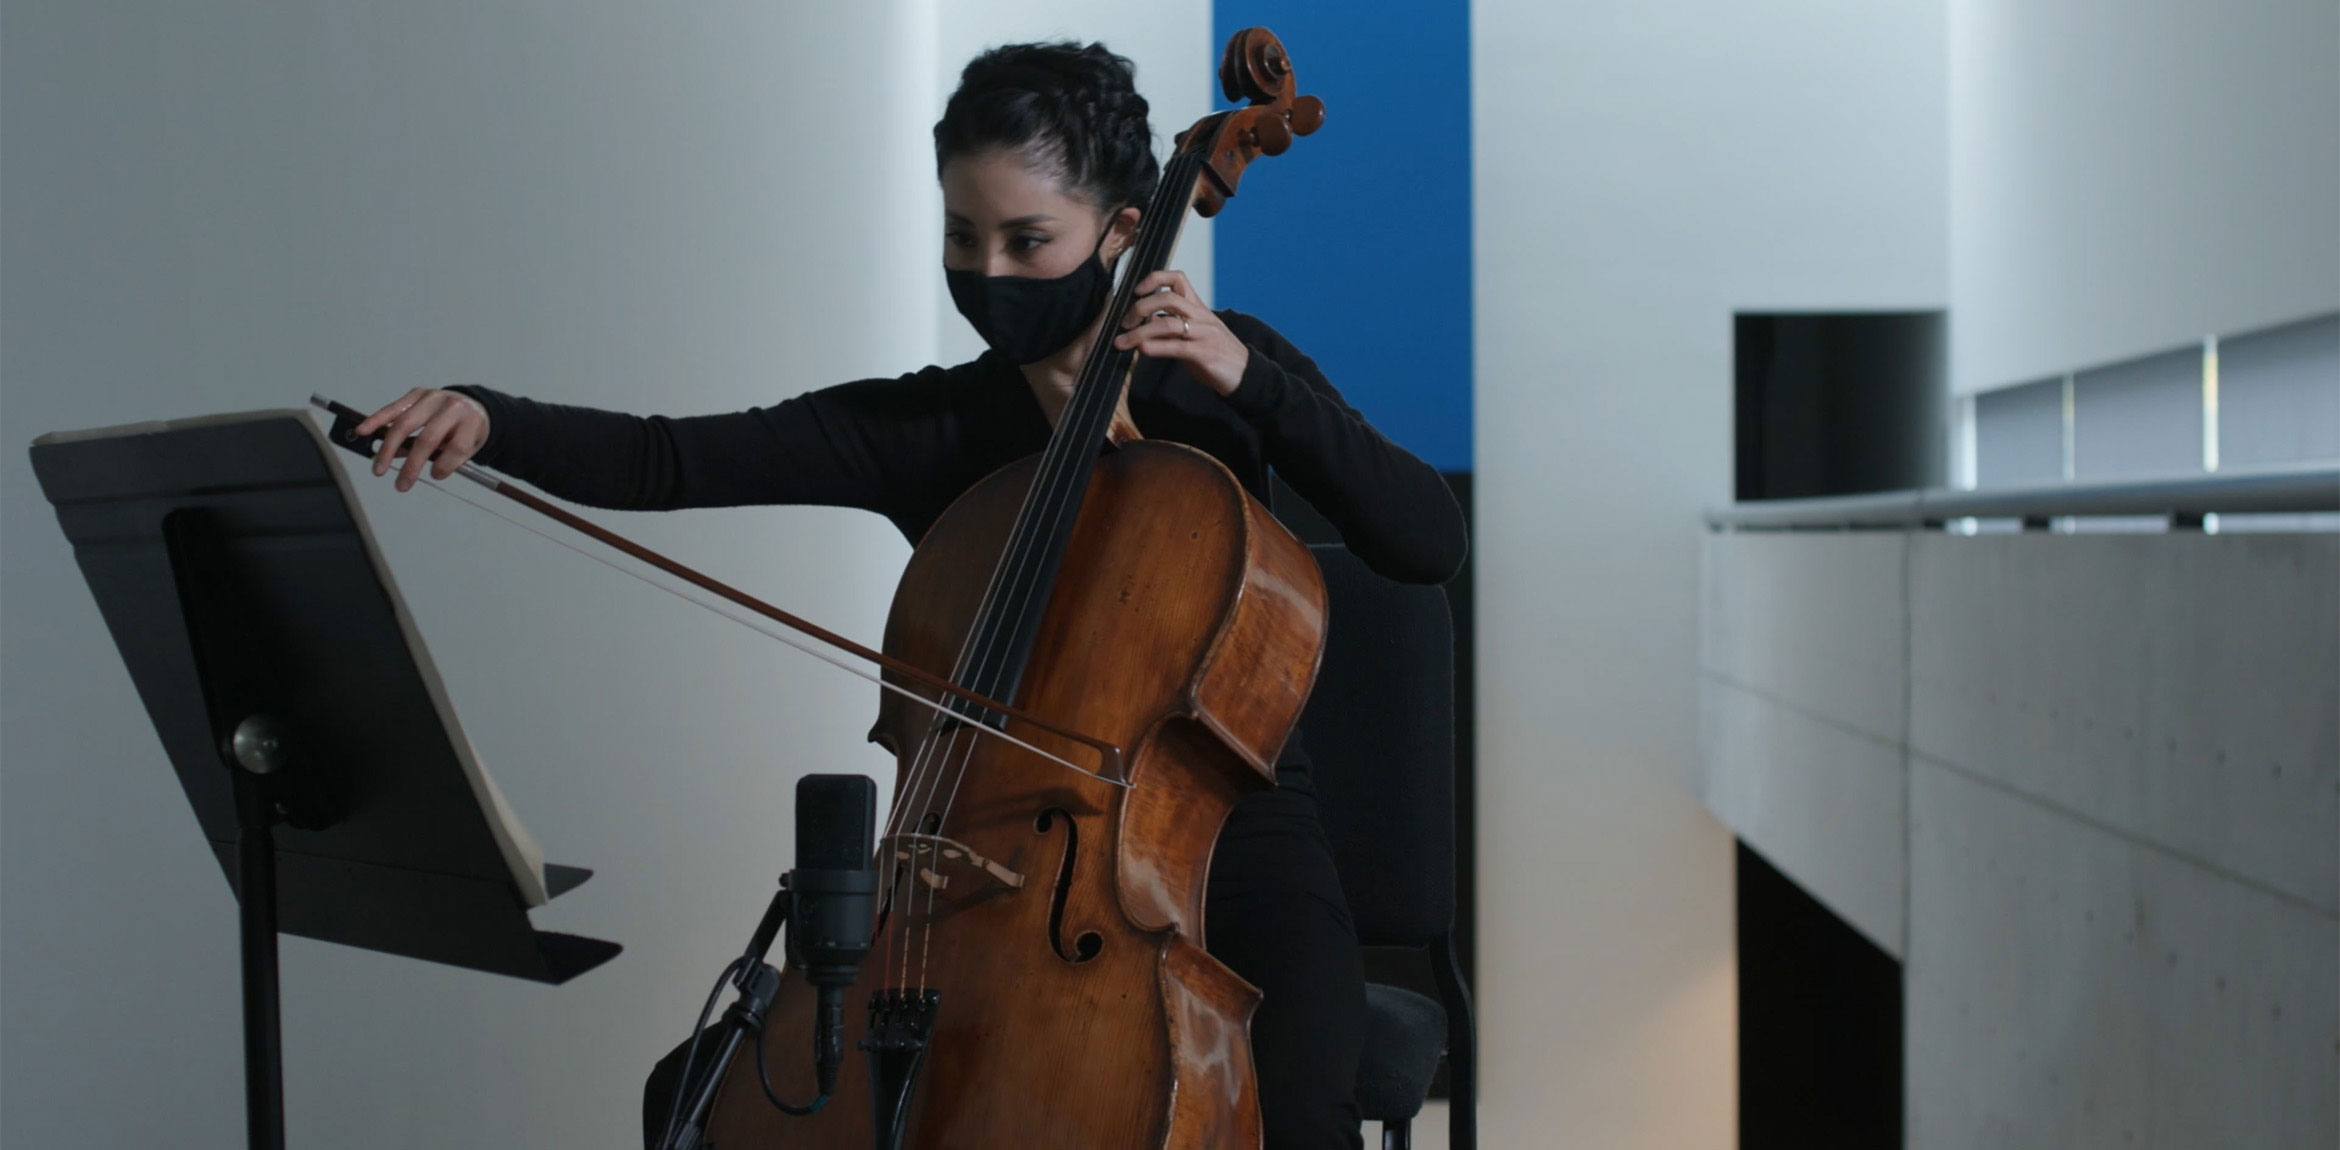 Cellist Elizabeth Chung performs Nathalie Joachim's 